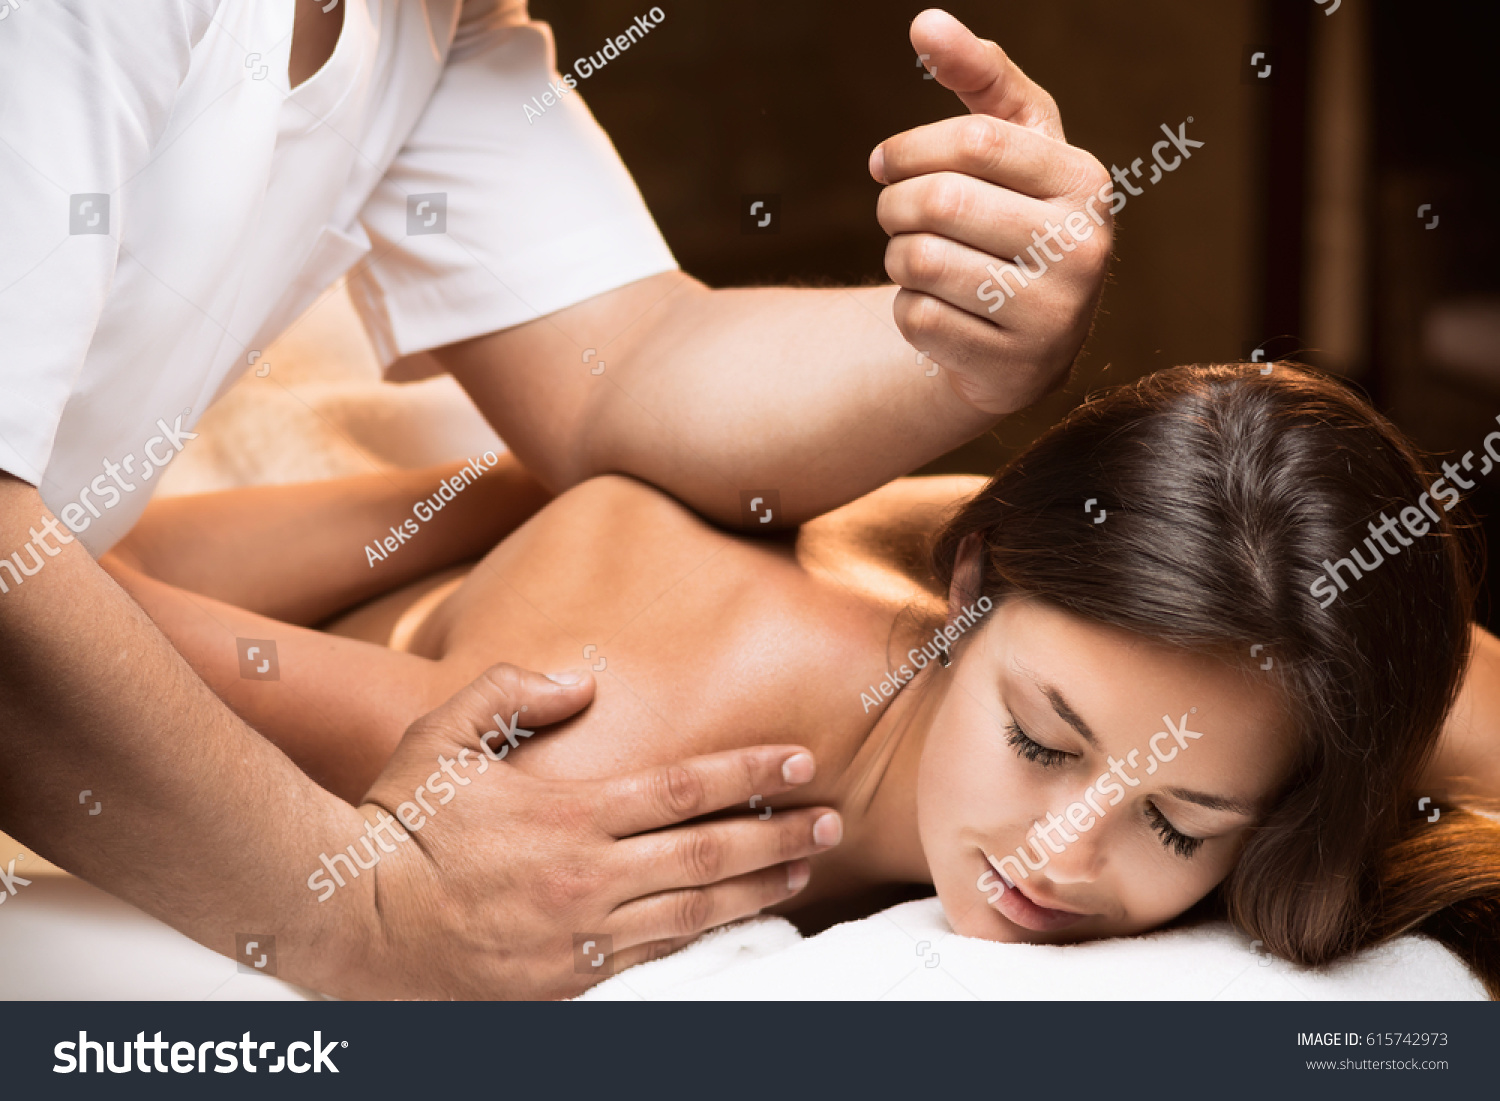 The girl enjoys deep tissue massage #615742973